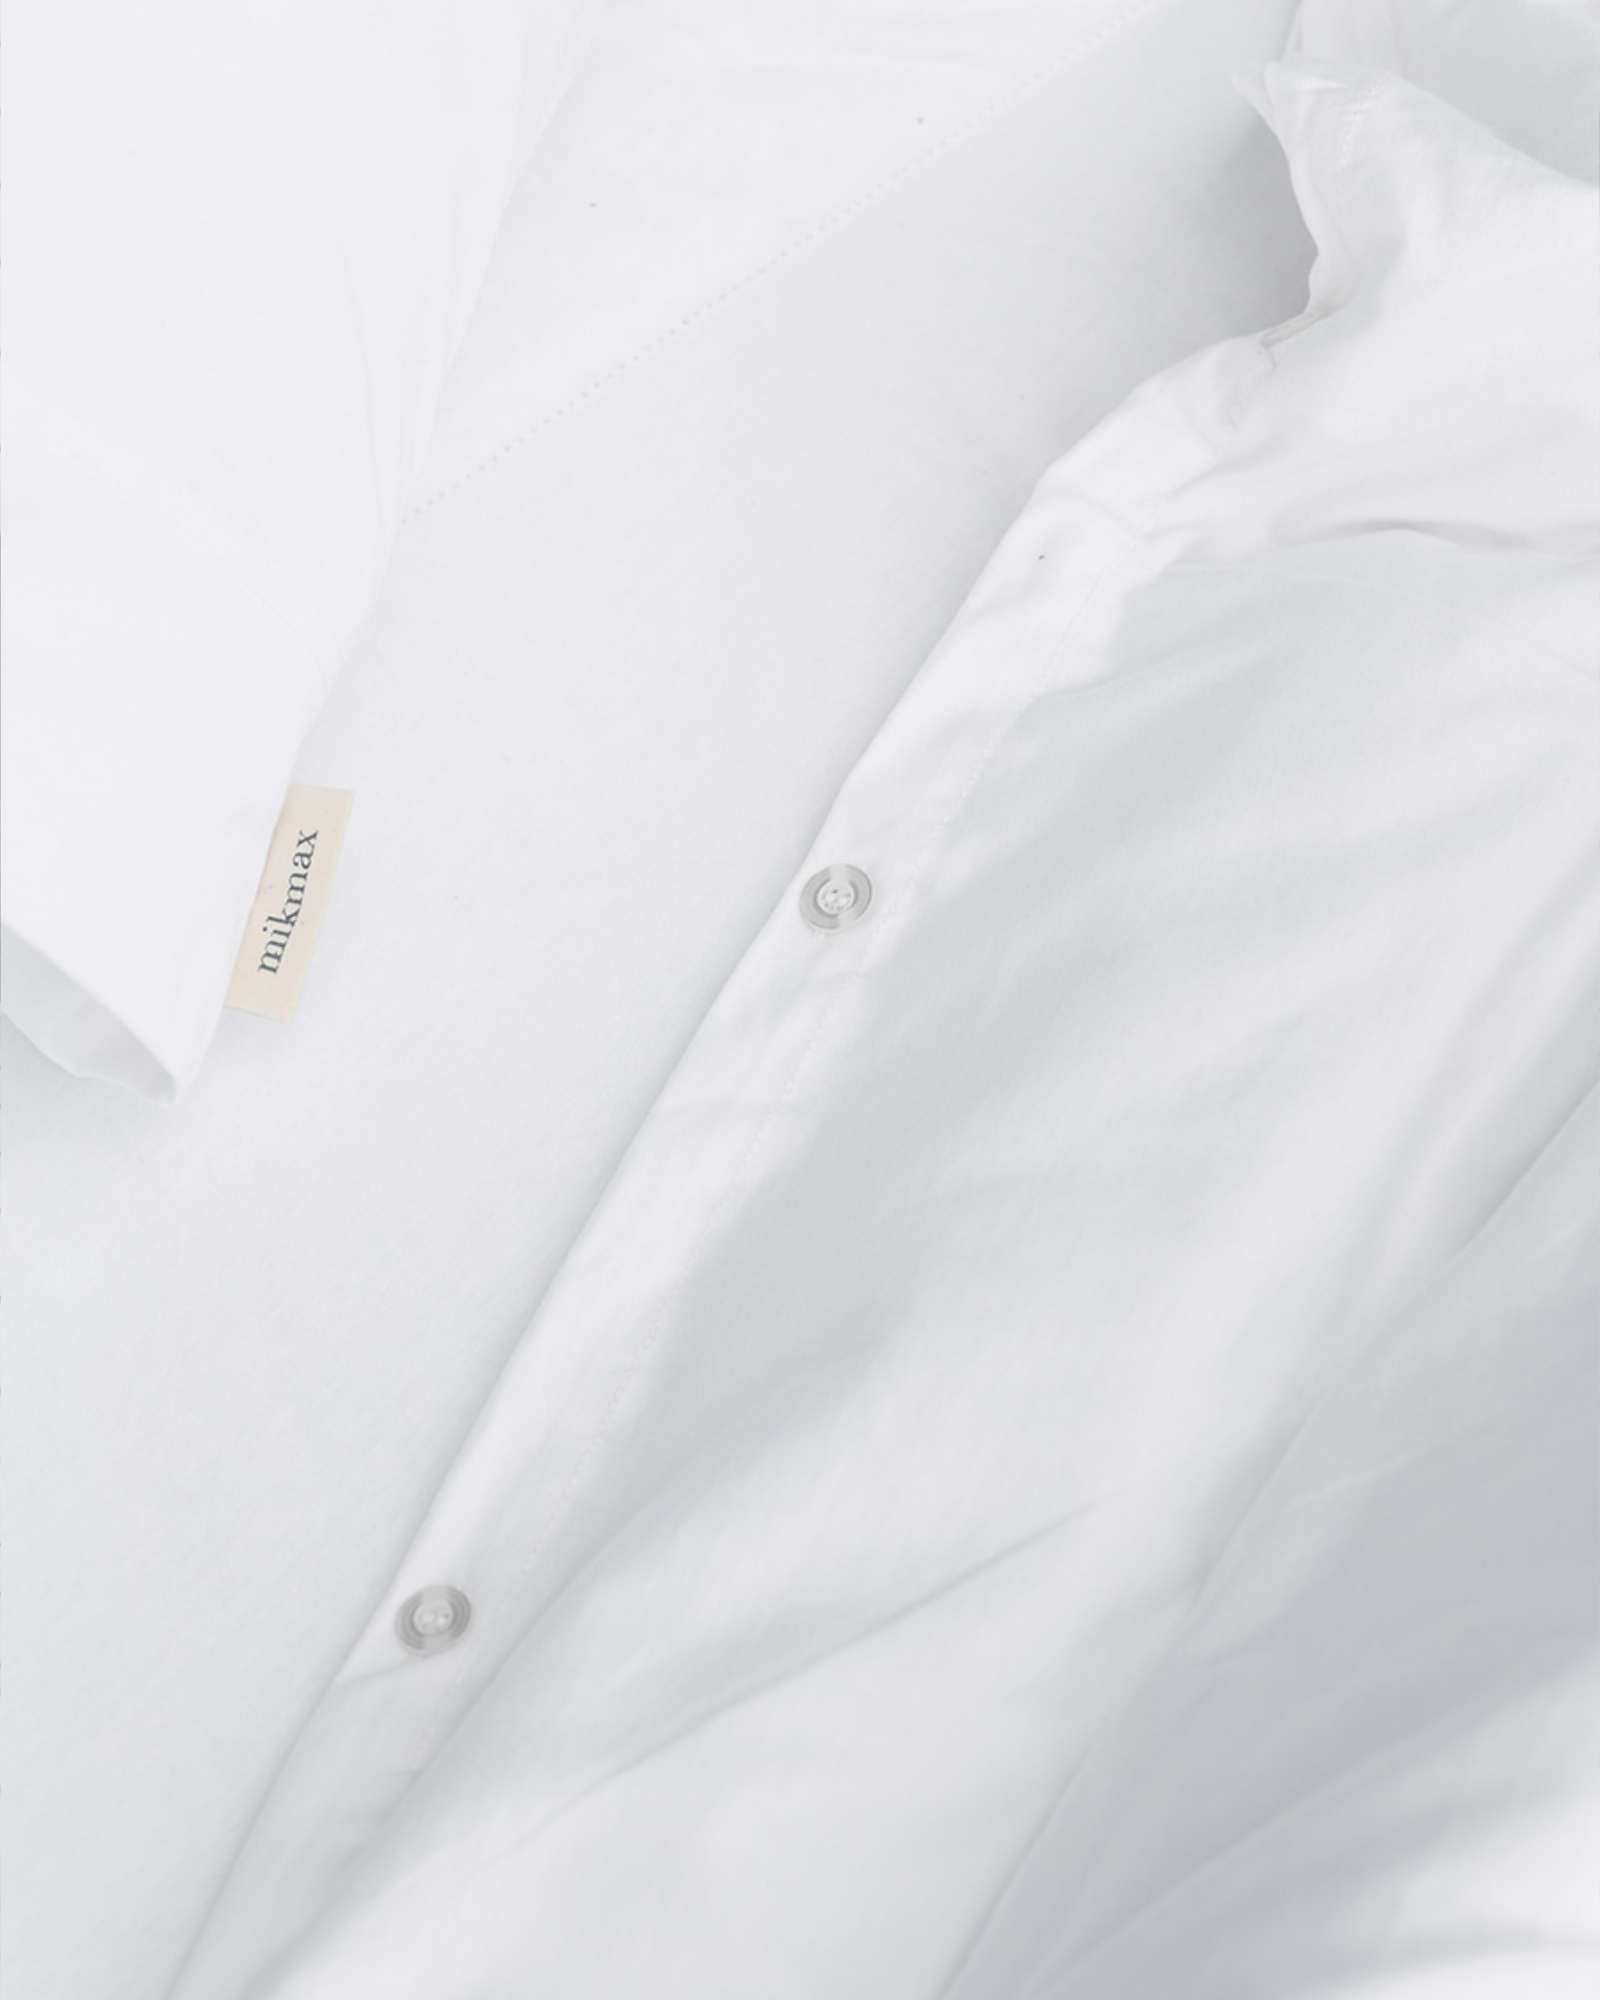 Mikmax - Pillowcase WHITE PLAIN - 65x65 cm - White